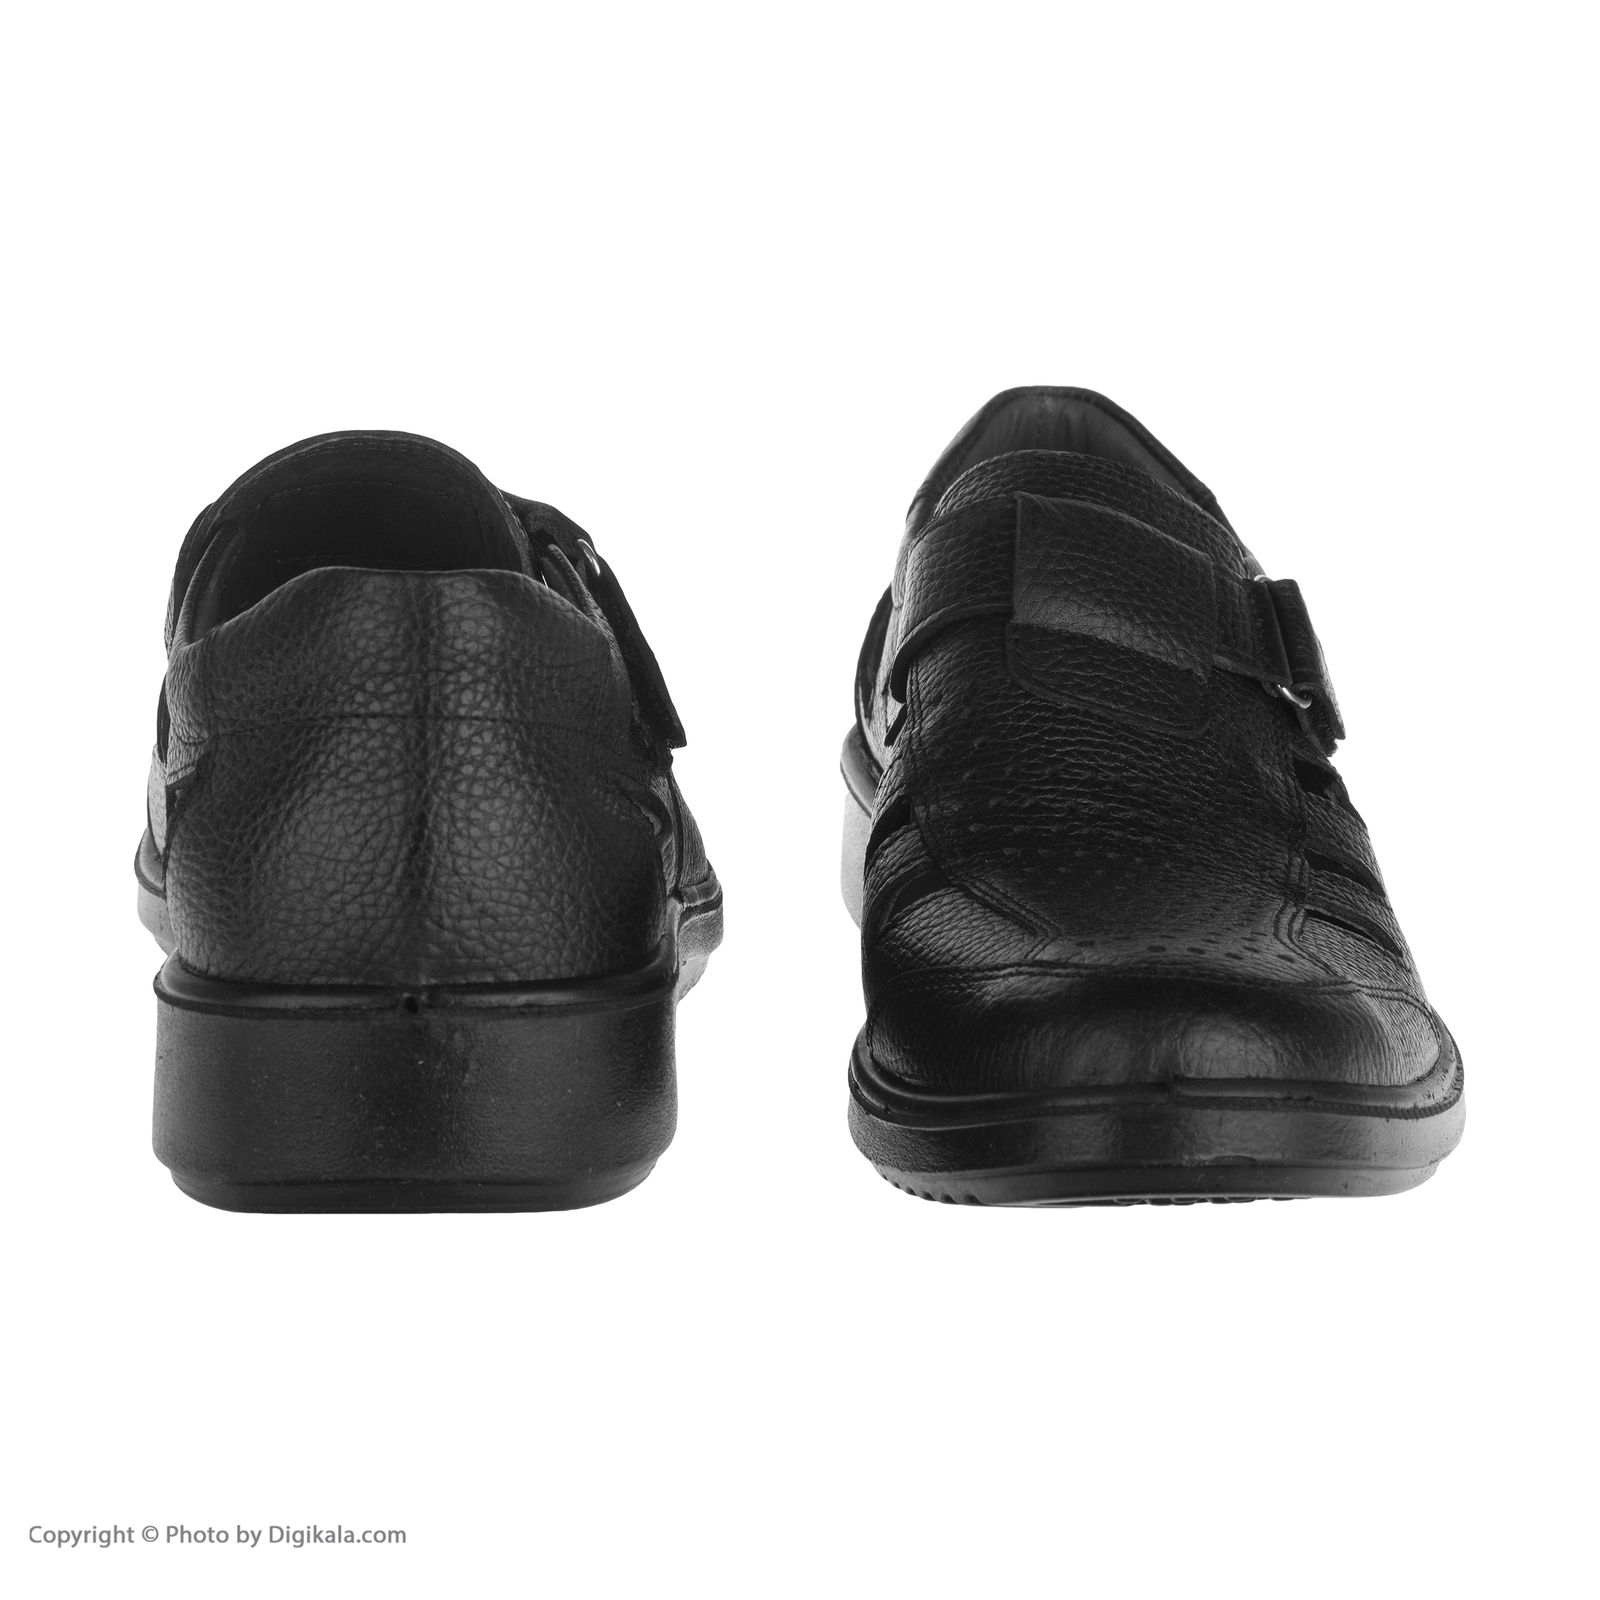  کفش روزمره مردانه واران مدل 7183h503101 -  - 4